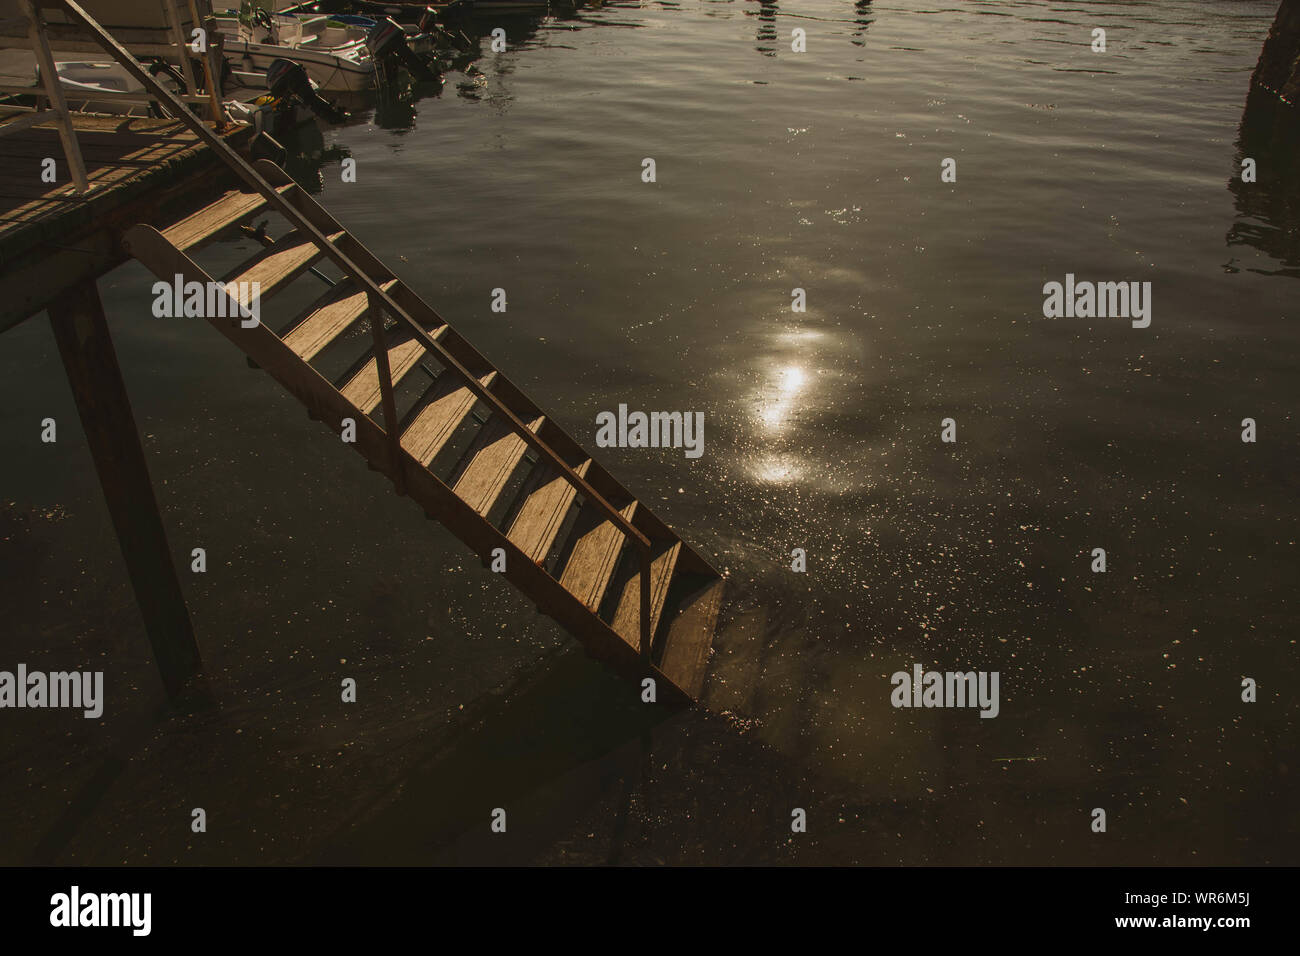 Steep Steps Leading To Lake Dock Stock Image - Image of steps, pond:  220289845